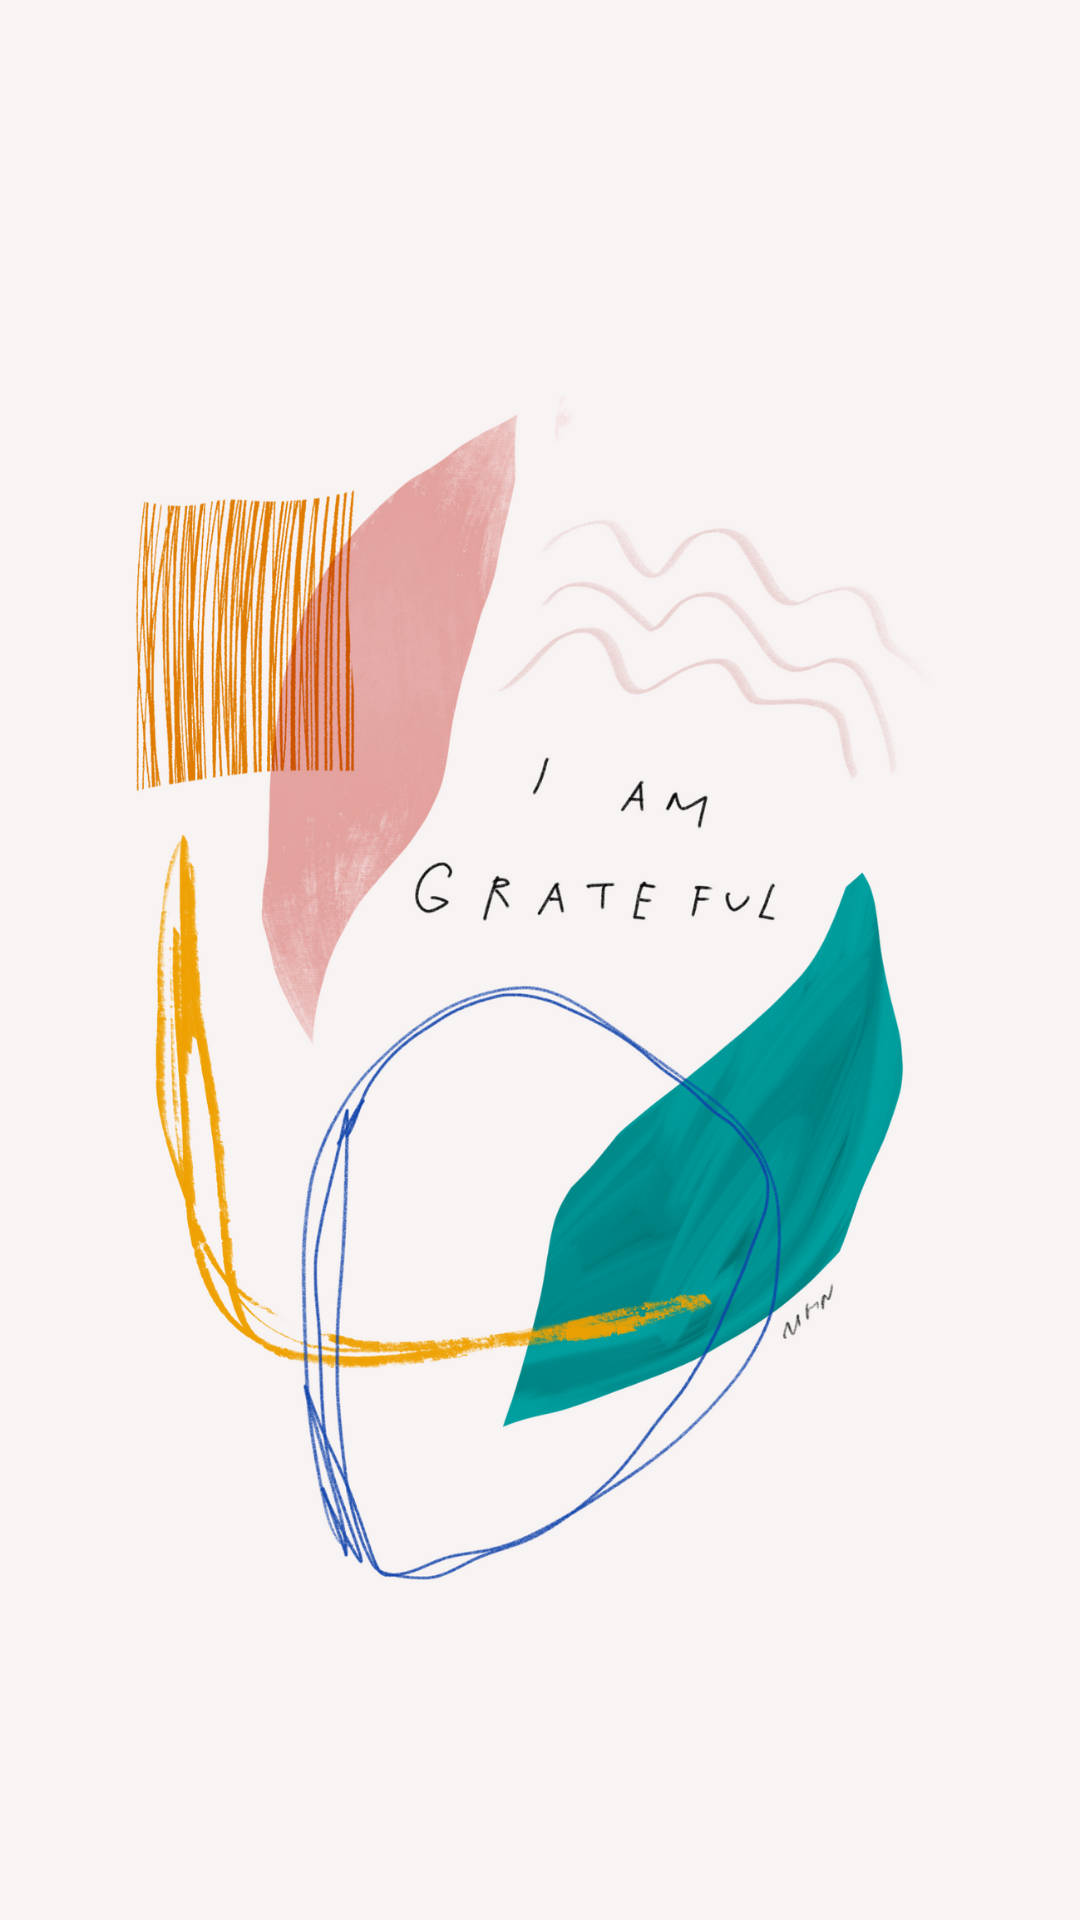 Aesthetic Grateful Affirmation Wallpaper